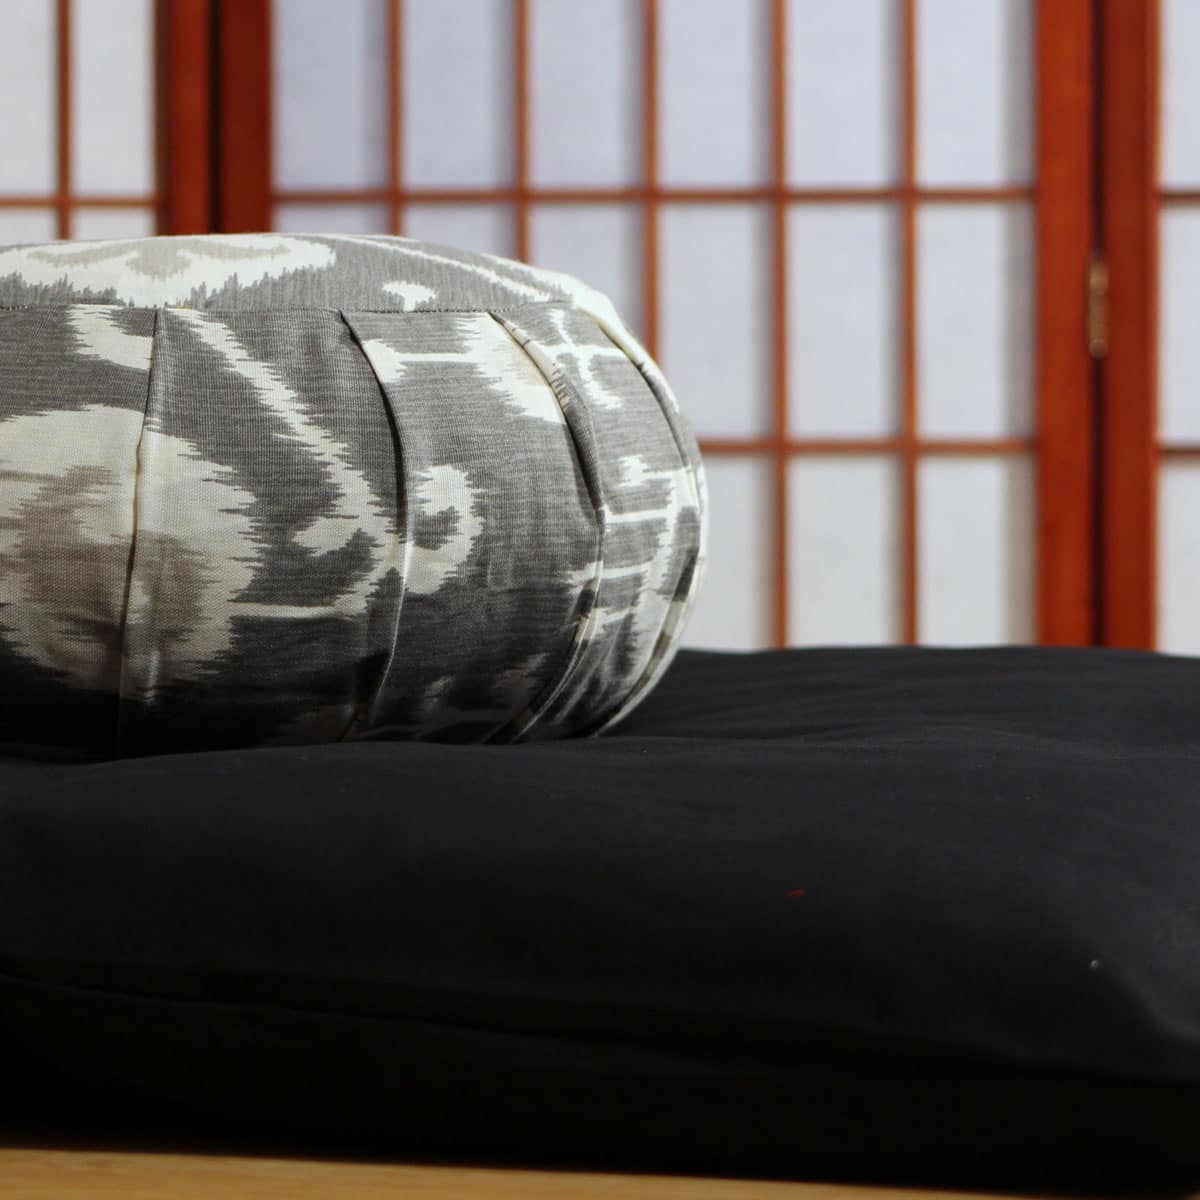 https://www.stillsitting.com/wp-content/uploads/2019/10/4-meditation-cushion-set-gallery.jpg